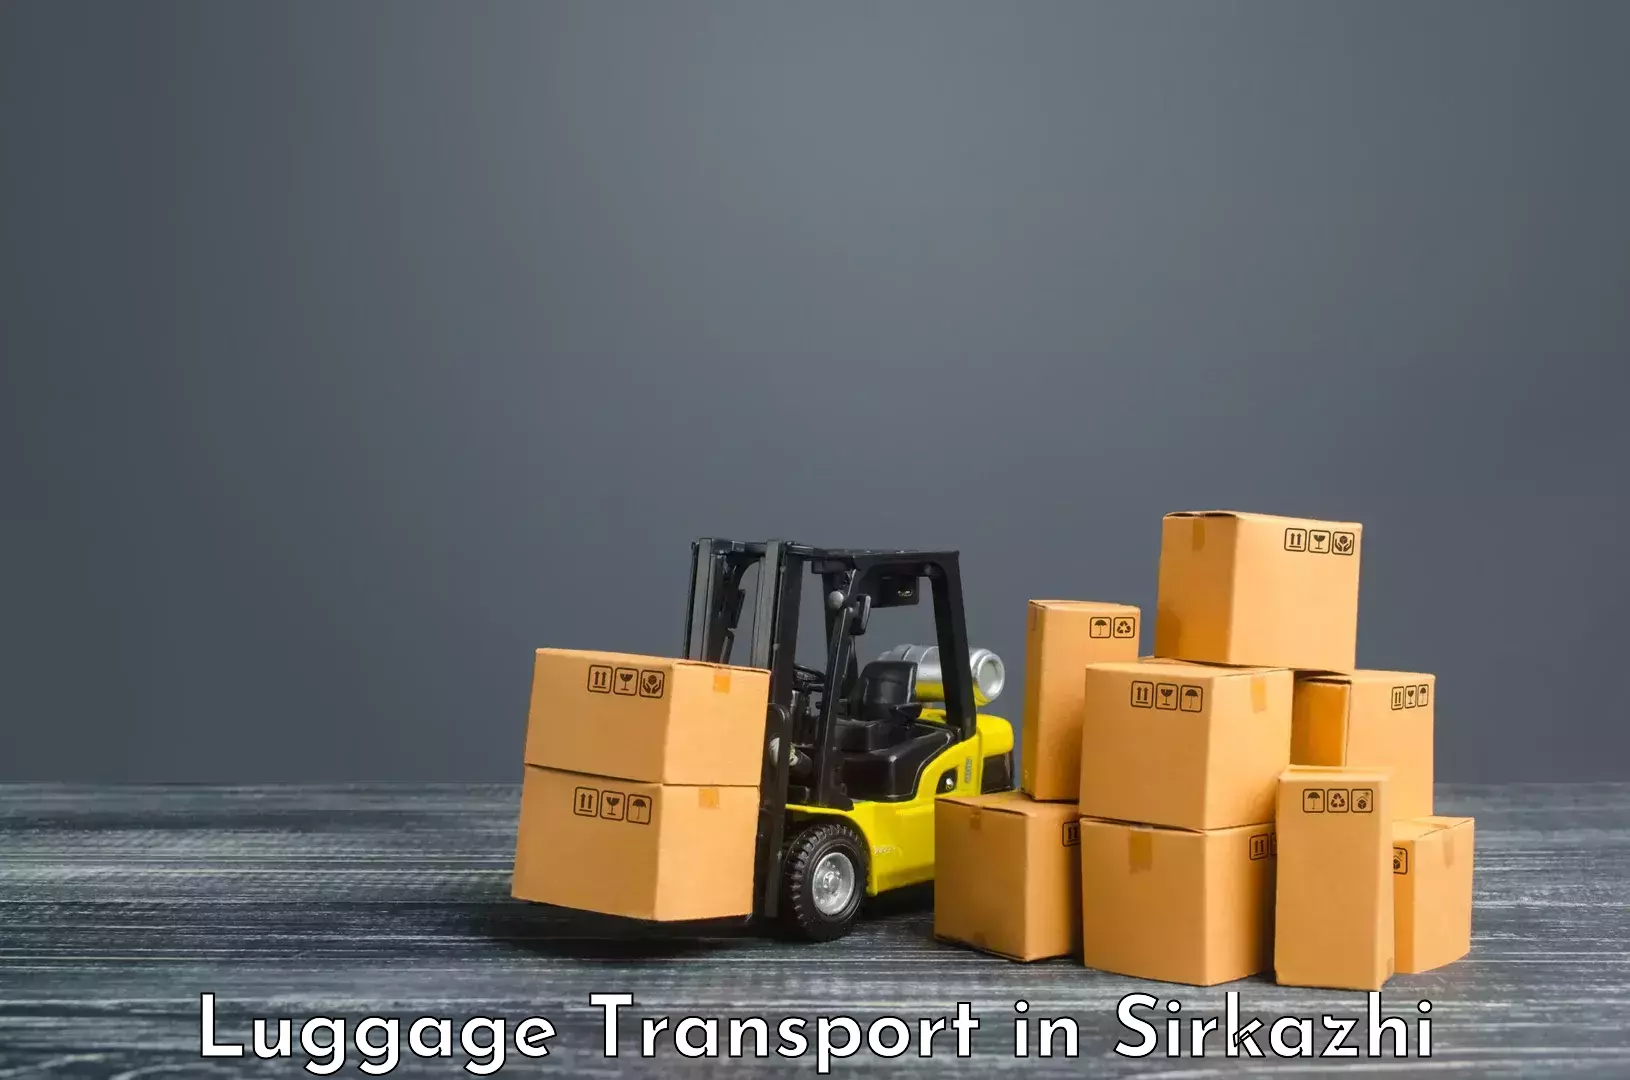 Luggage transport deals in Sirkazhi